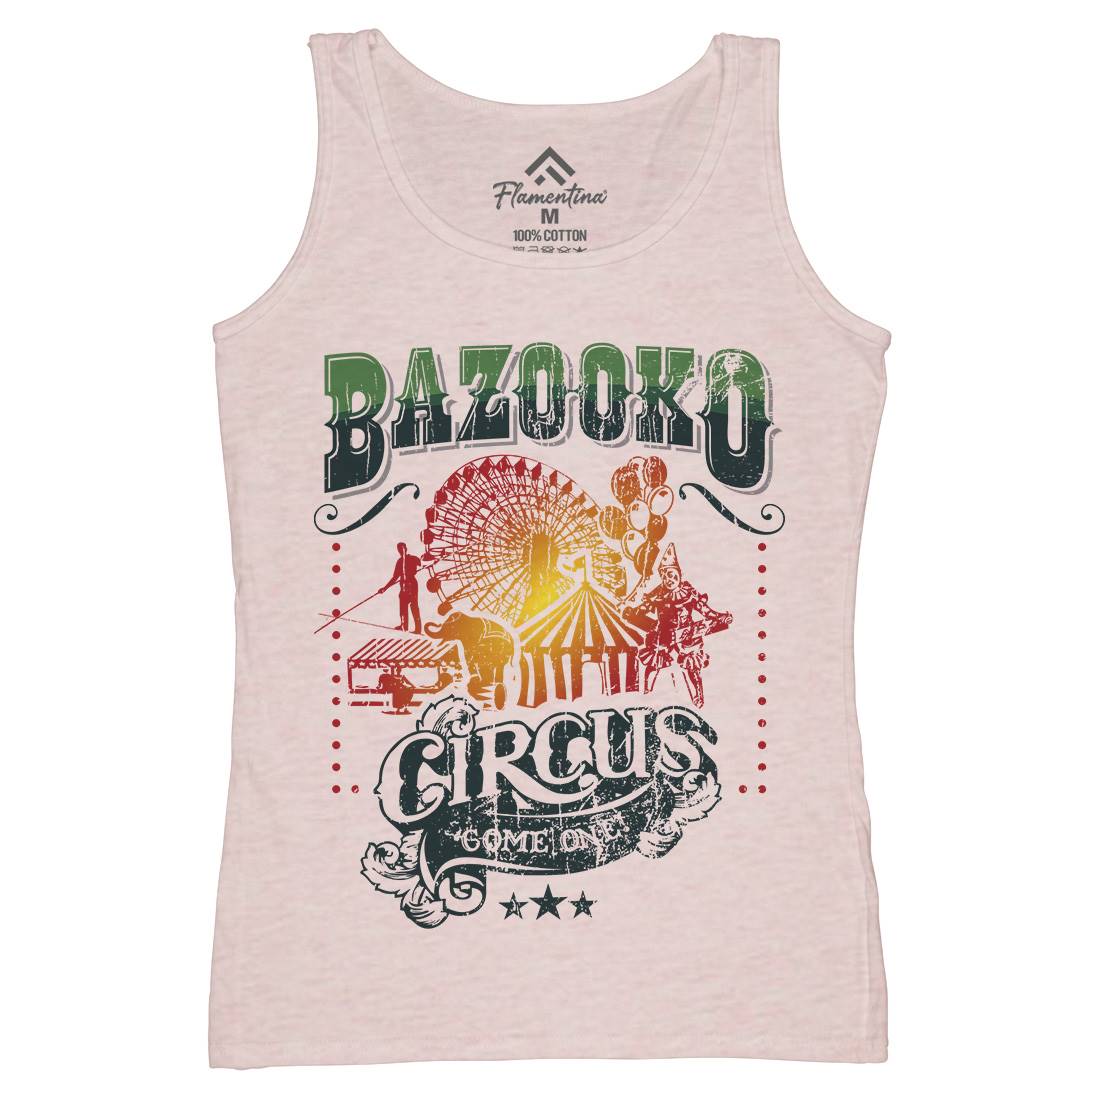 Bazookos Circus Womens Organic Tank Top Vest Retro D254